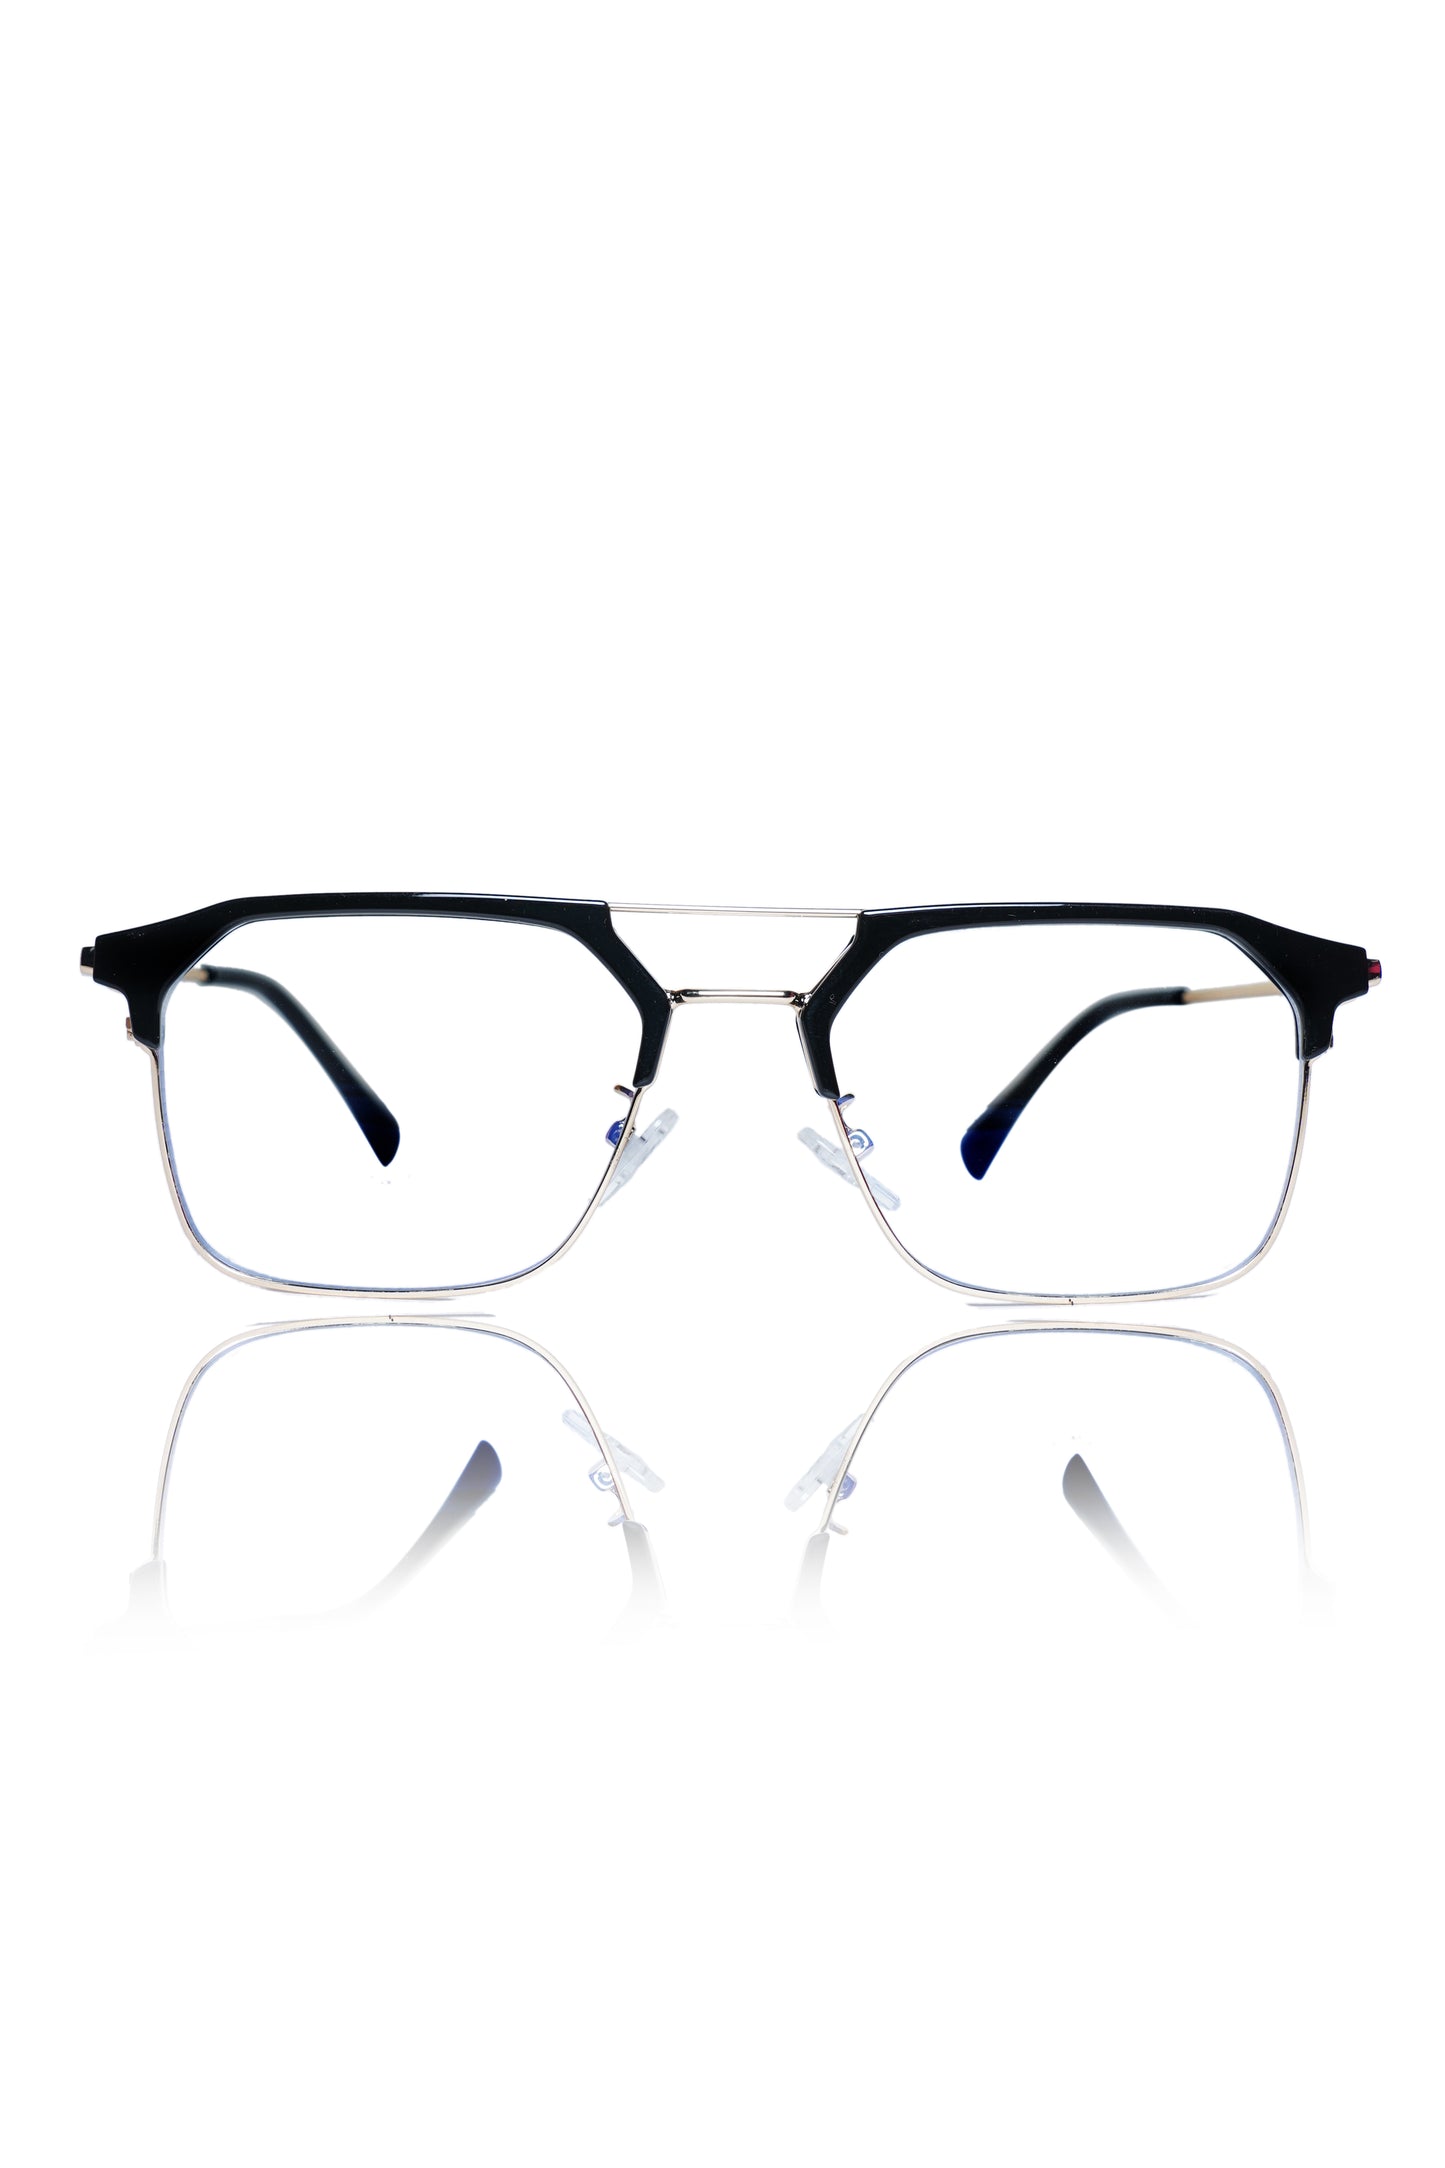 Jodykoes® Premium Series Classic Vintage Eyewear Eyeglasses Spectacles with Blue Light Anti Glare Glasses Frame for Men and Women  (Black & Gold)